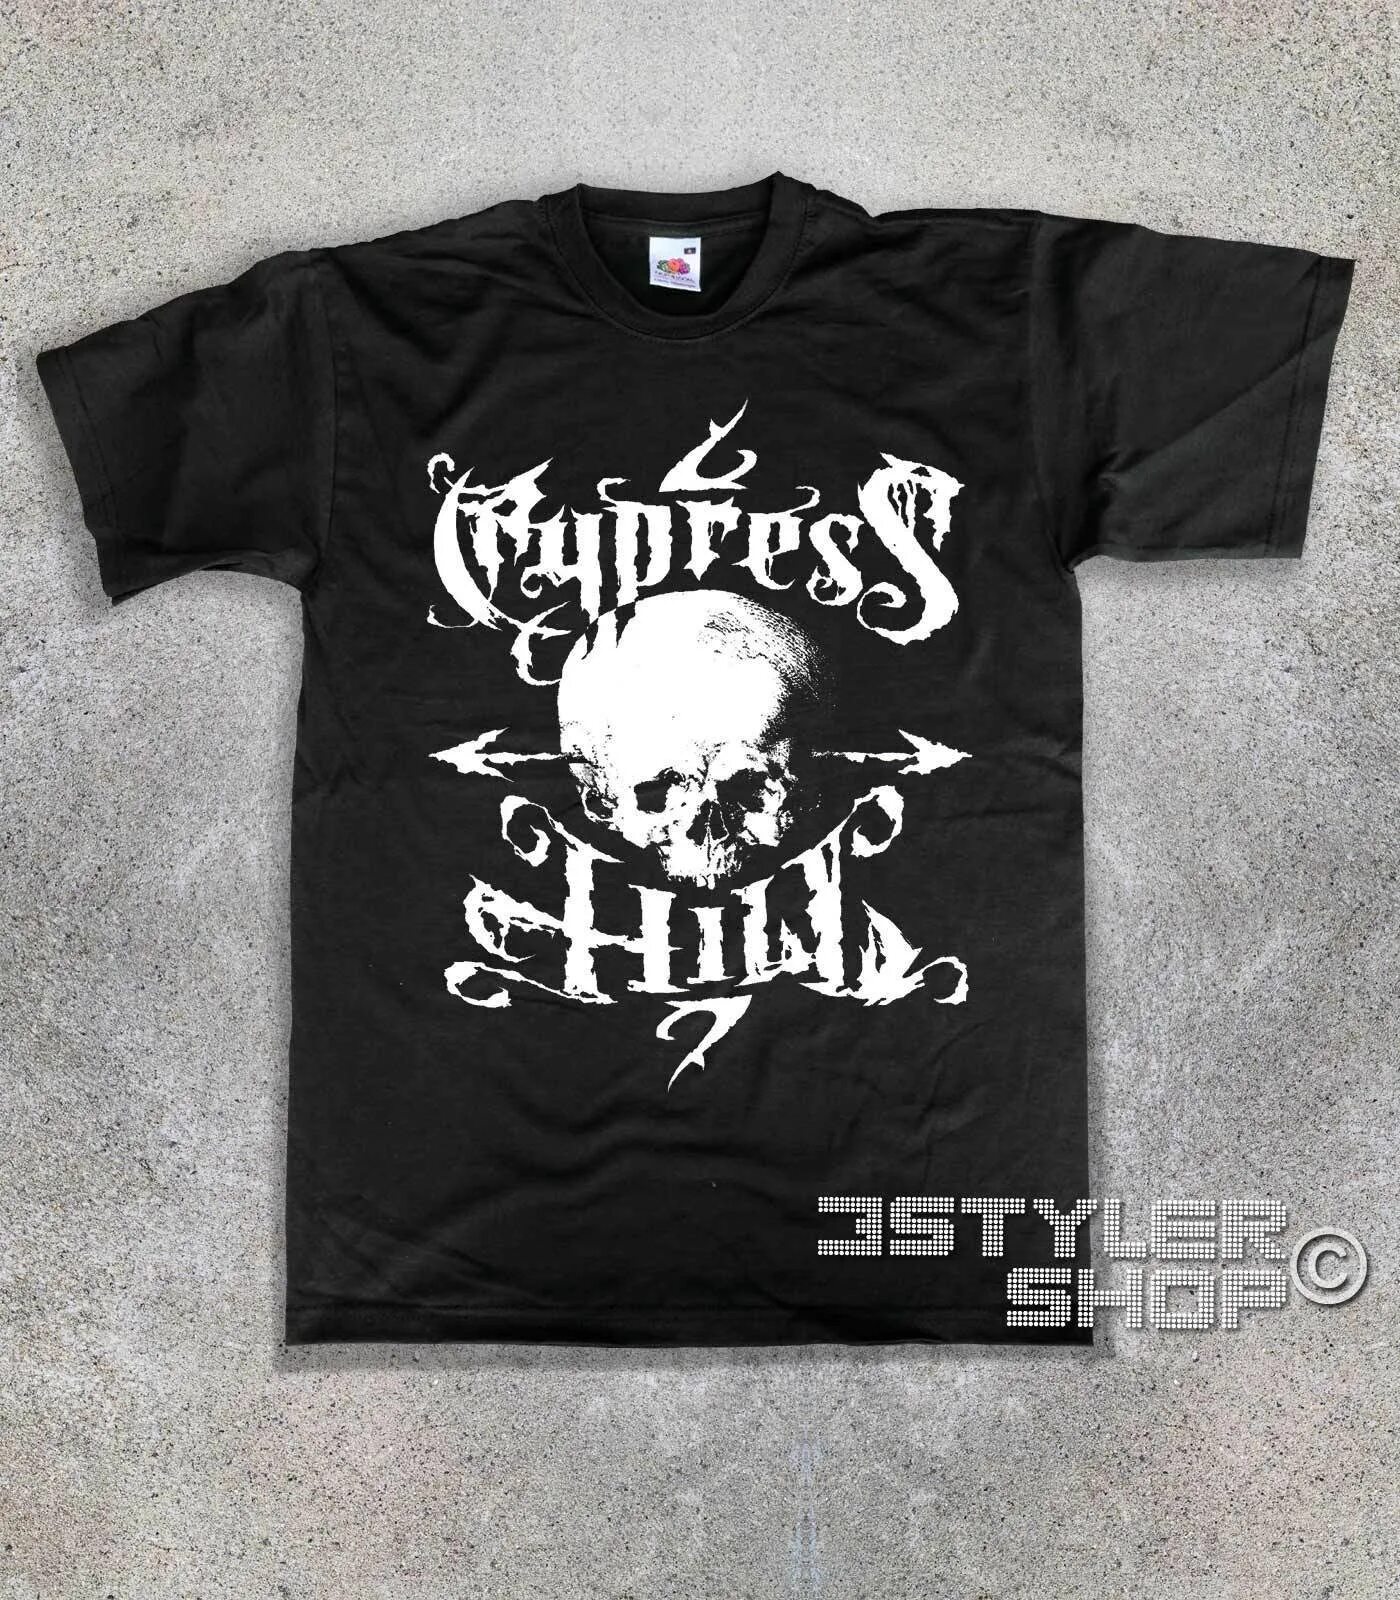 Insane in the brain hill. Футболка Сайпресс Хилл. The great Hill футболка. Cypress Hill фото. Insane in the Brain Cypress Hill обложка.